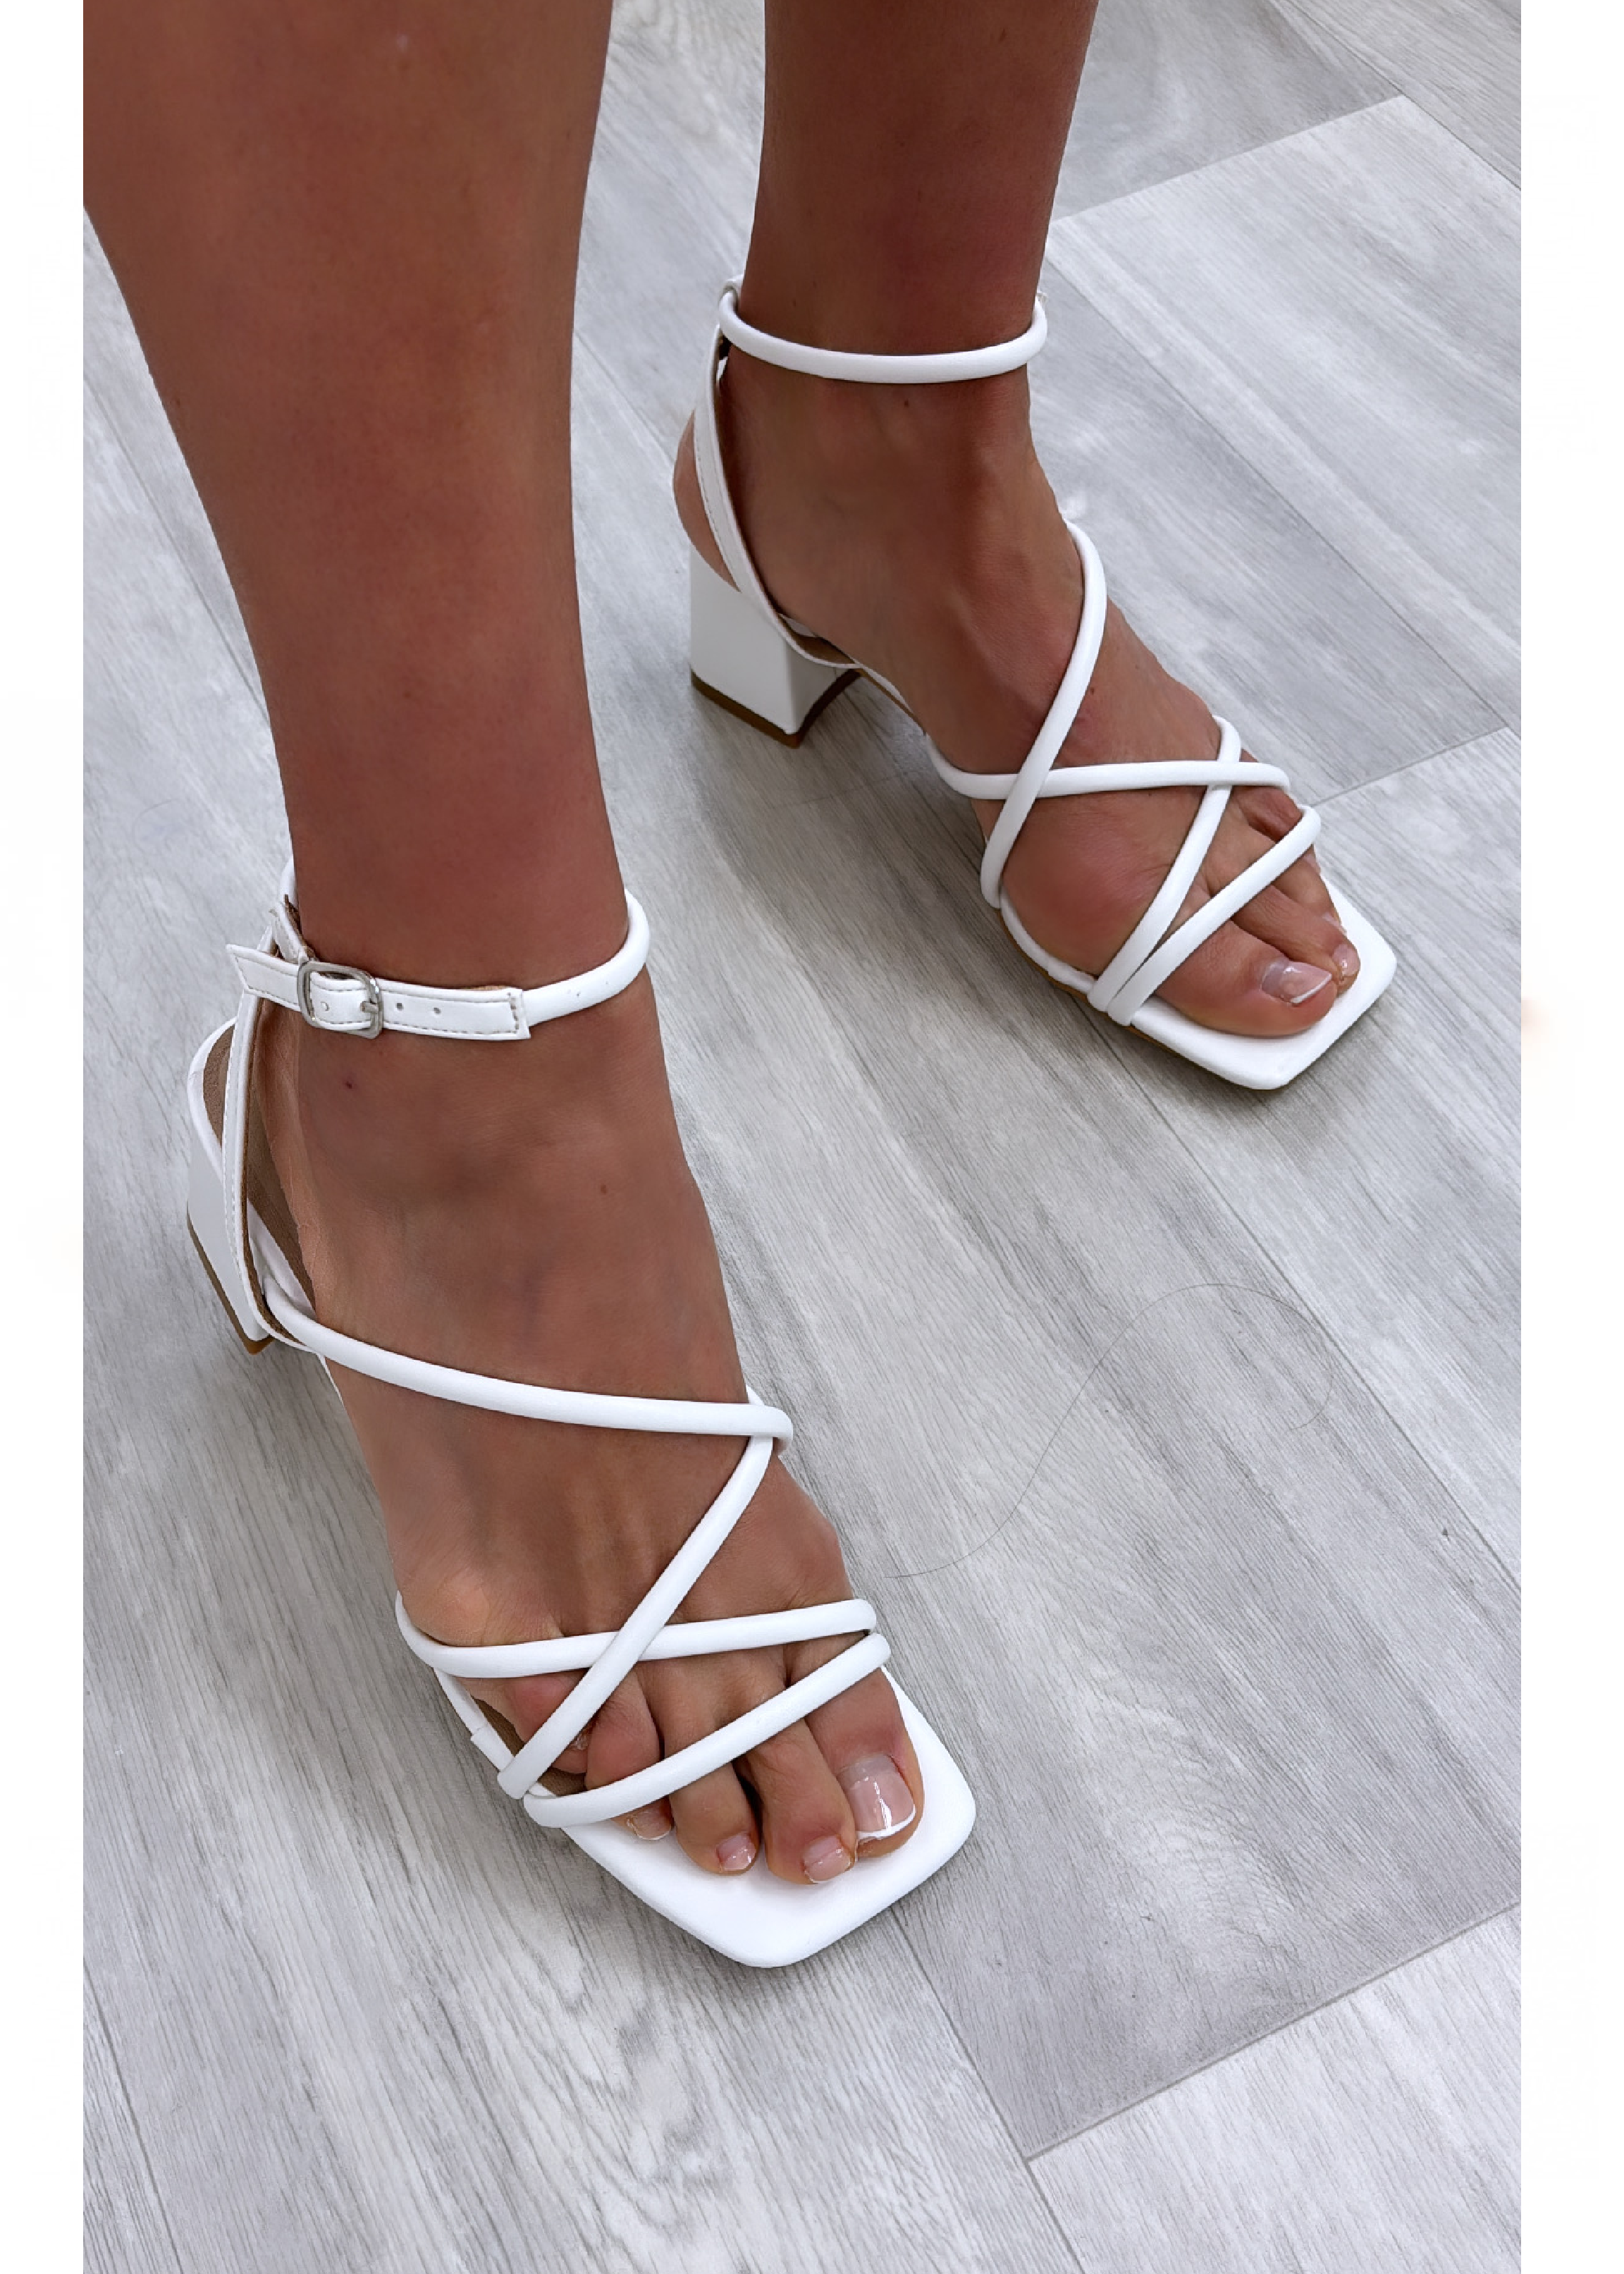 Grainne White Strappy Sandals